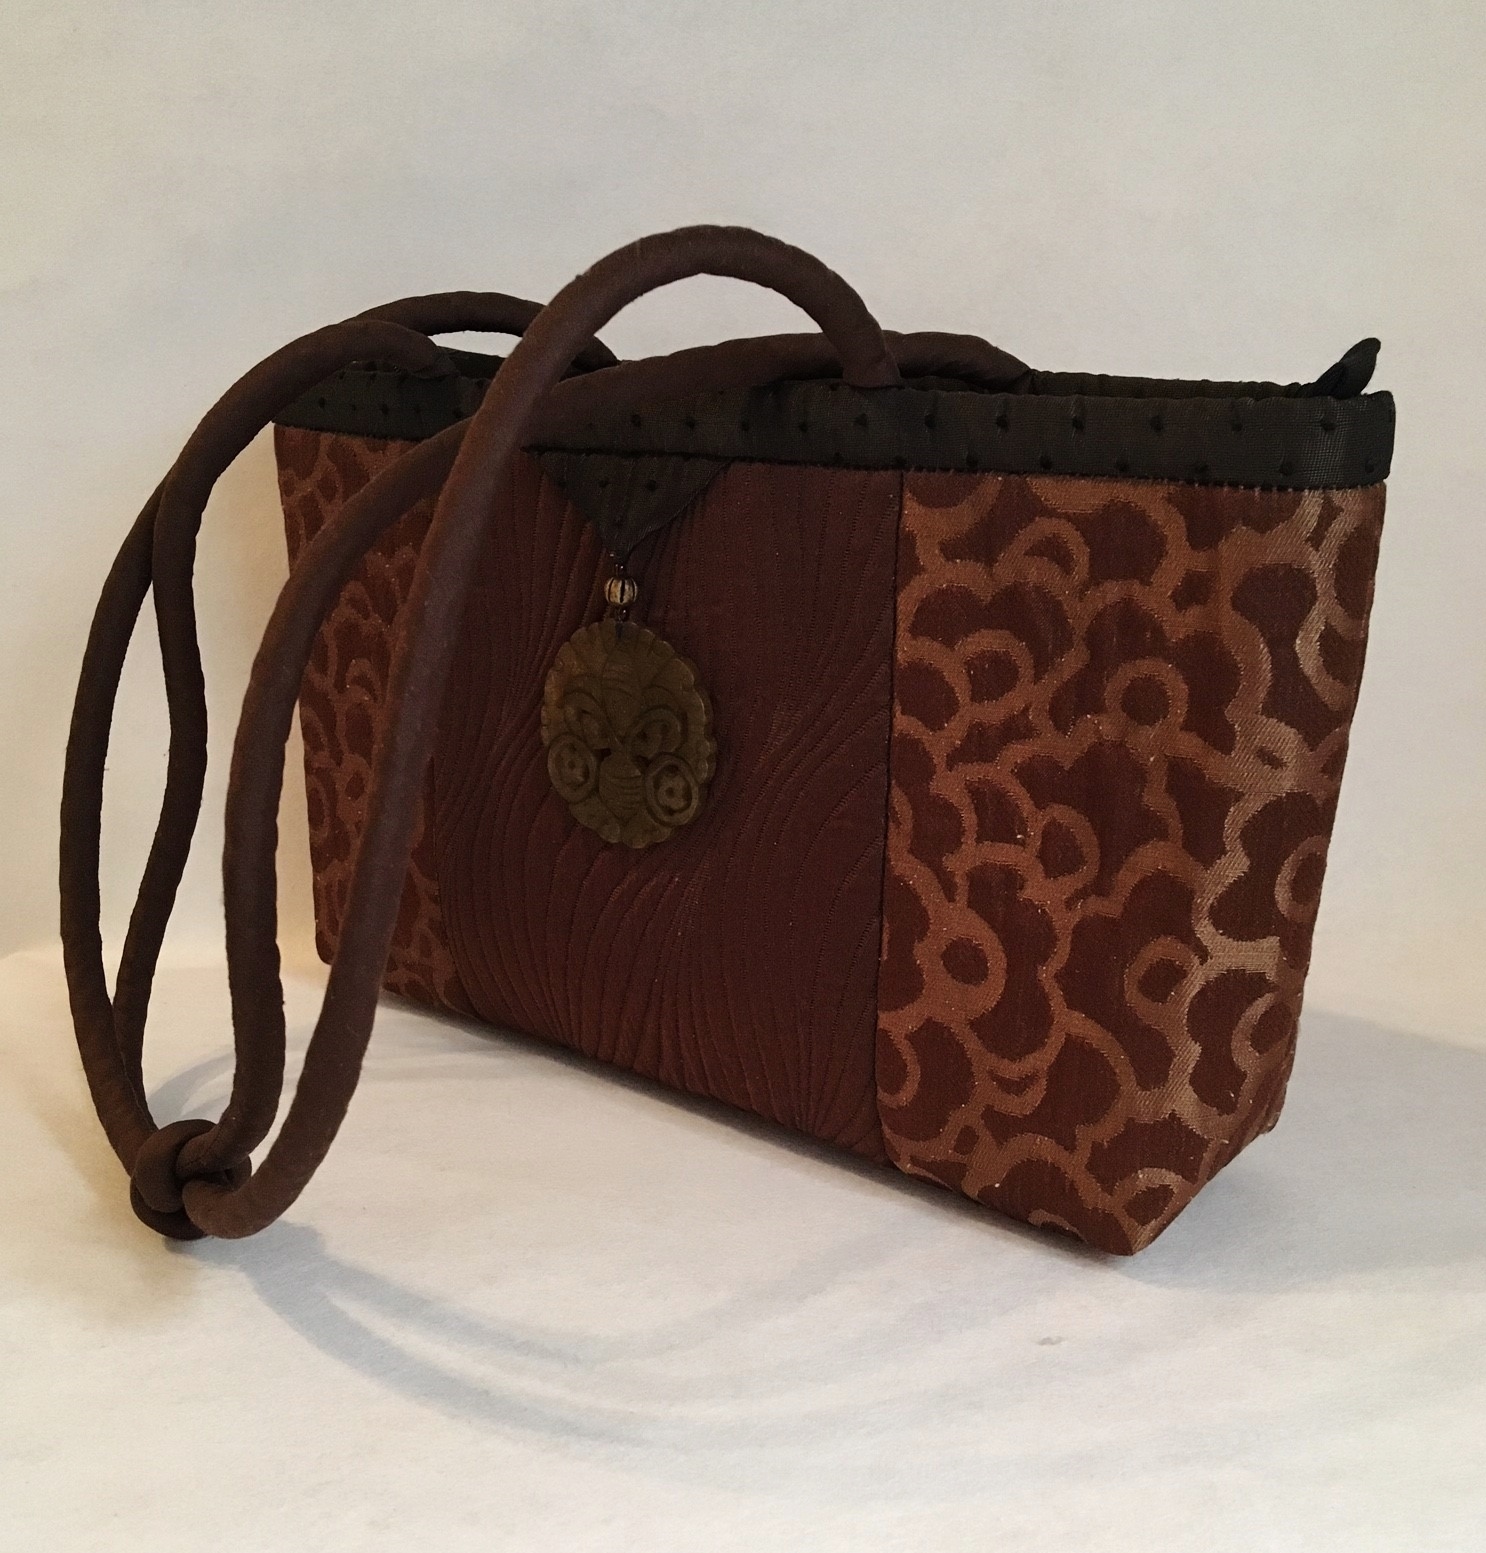 Primary image for Square Luna Purse Tapestry Stone Chocolate Brown Copper Handmade Handbag Tote